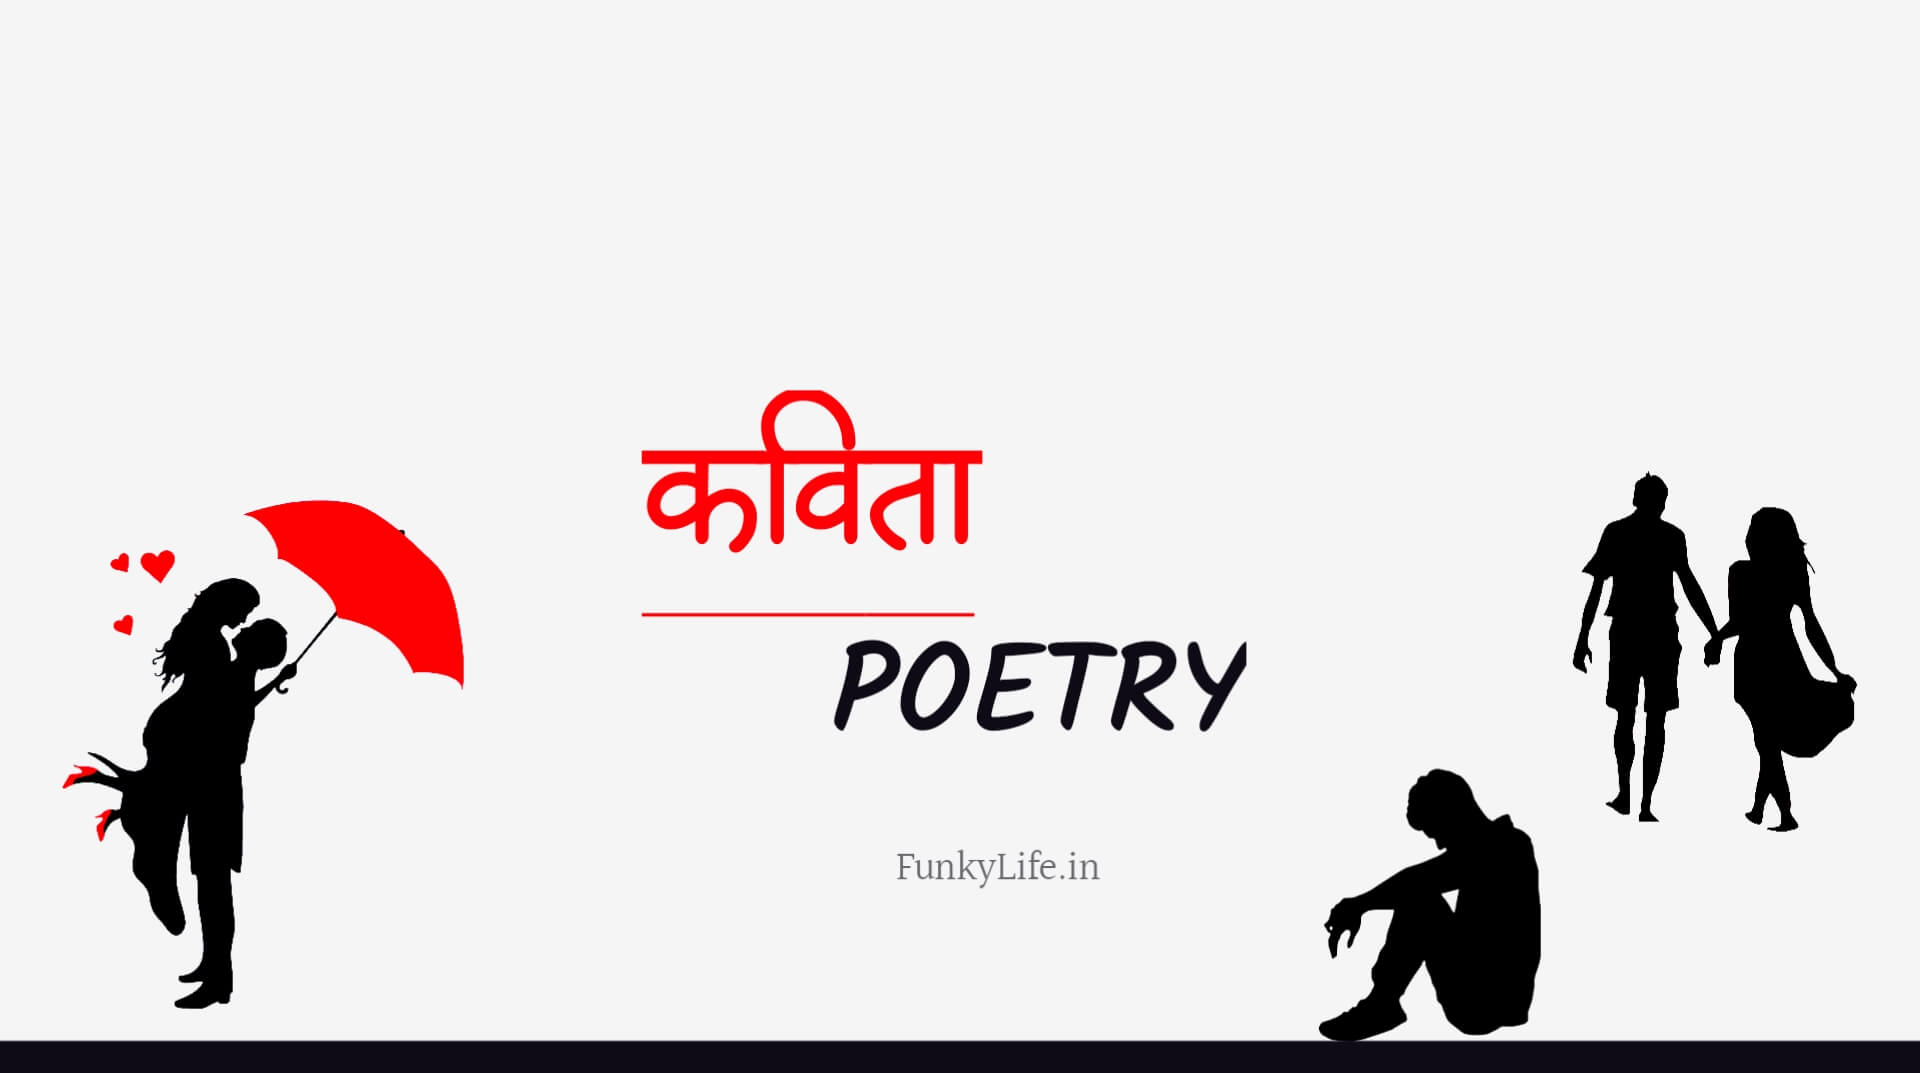 Hindi Poetry